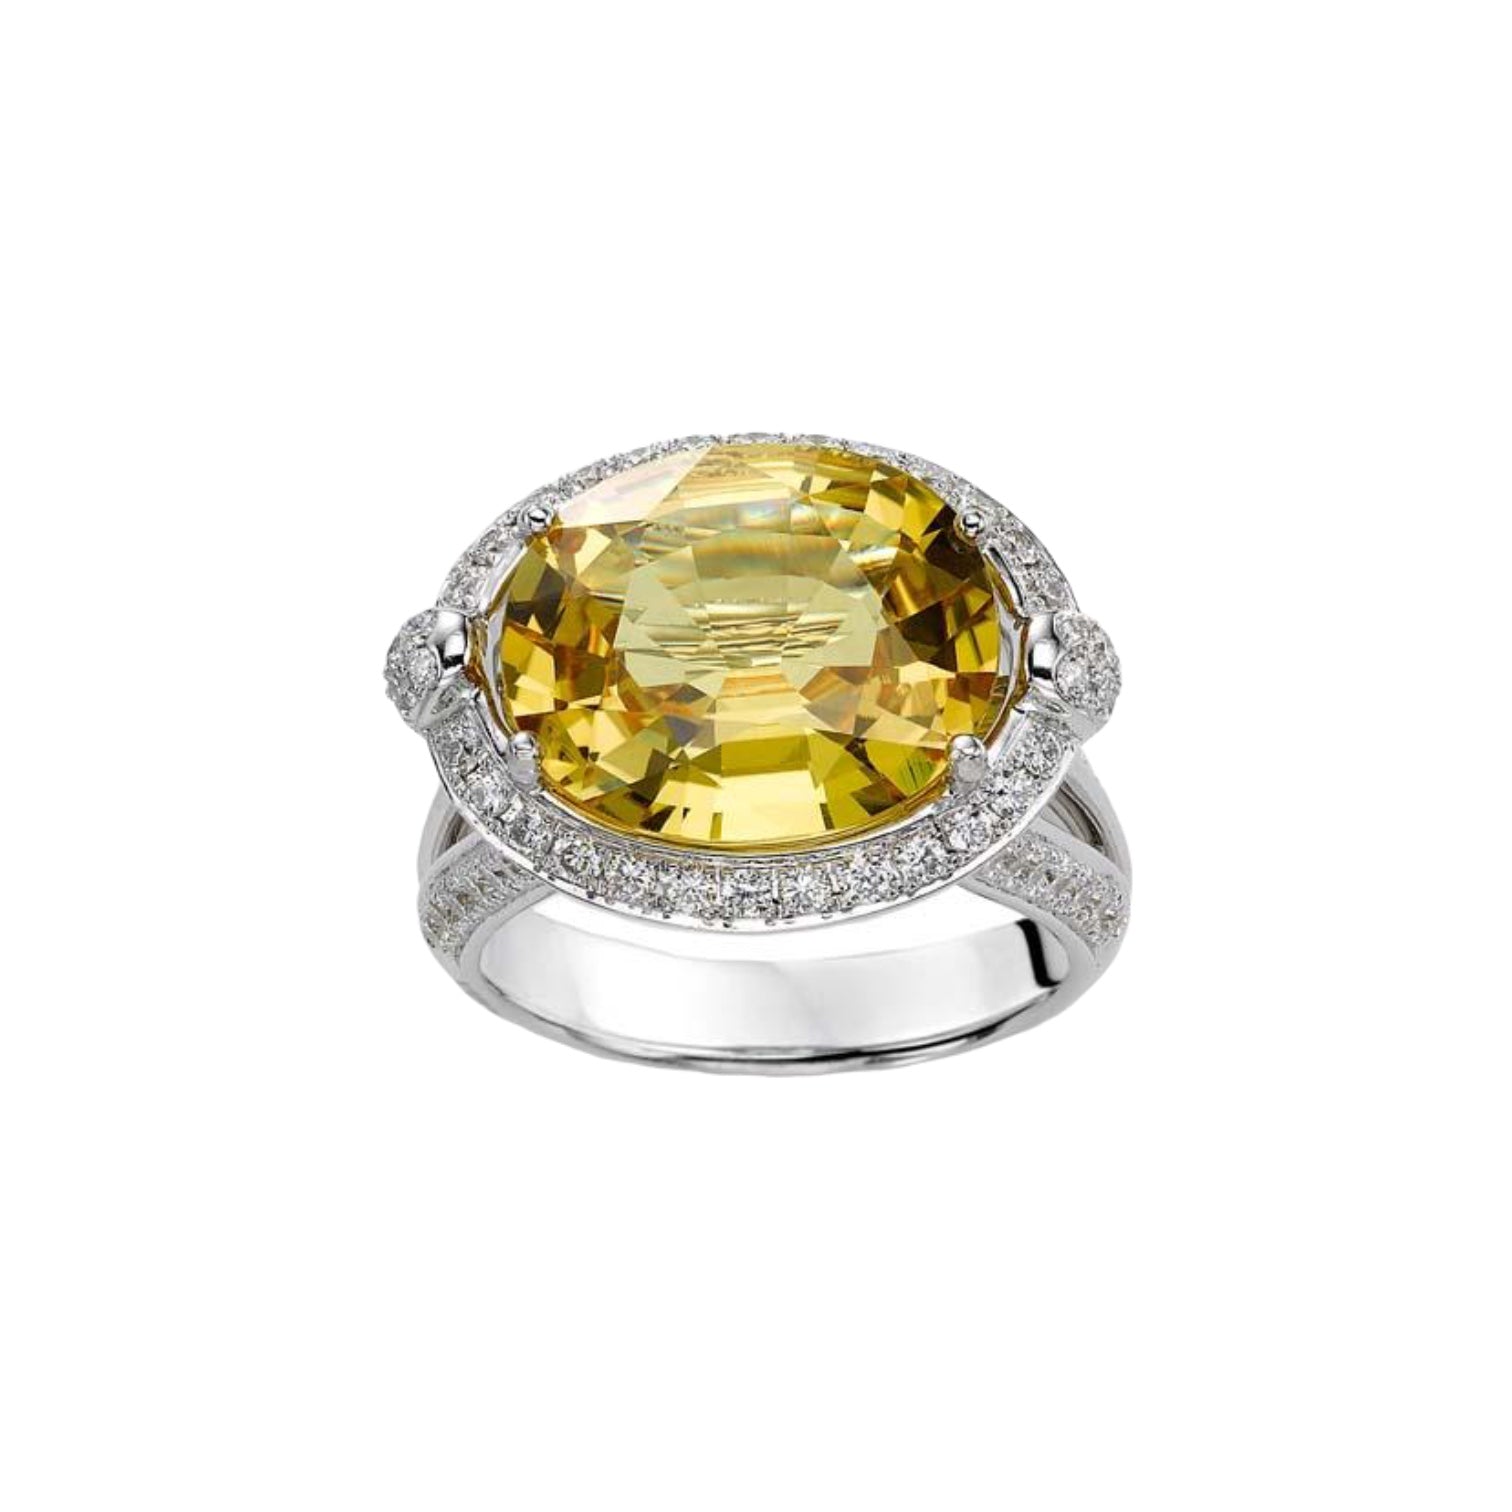 The Grand Yellow Sapphire Ring